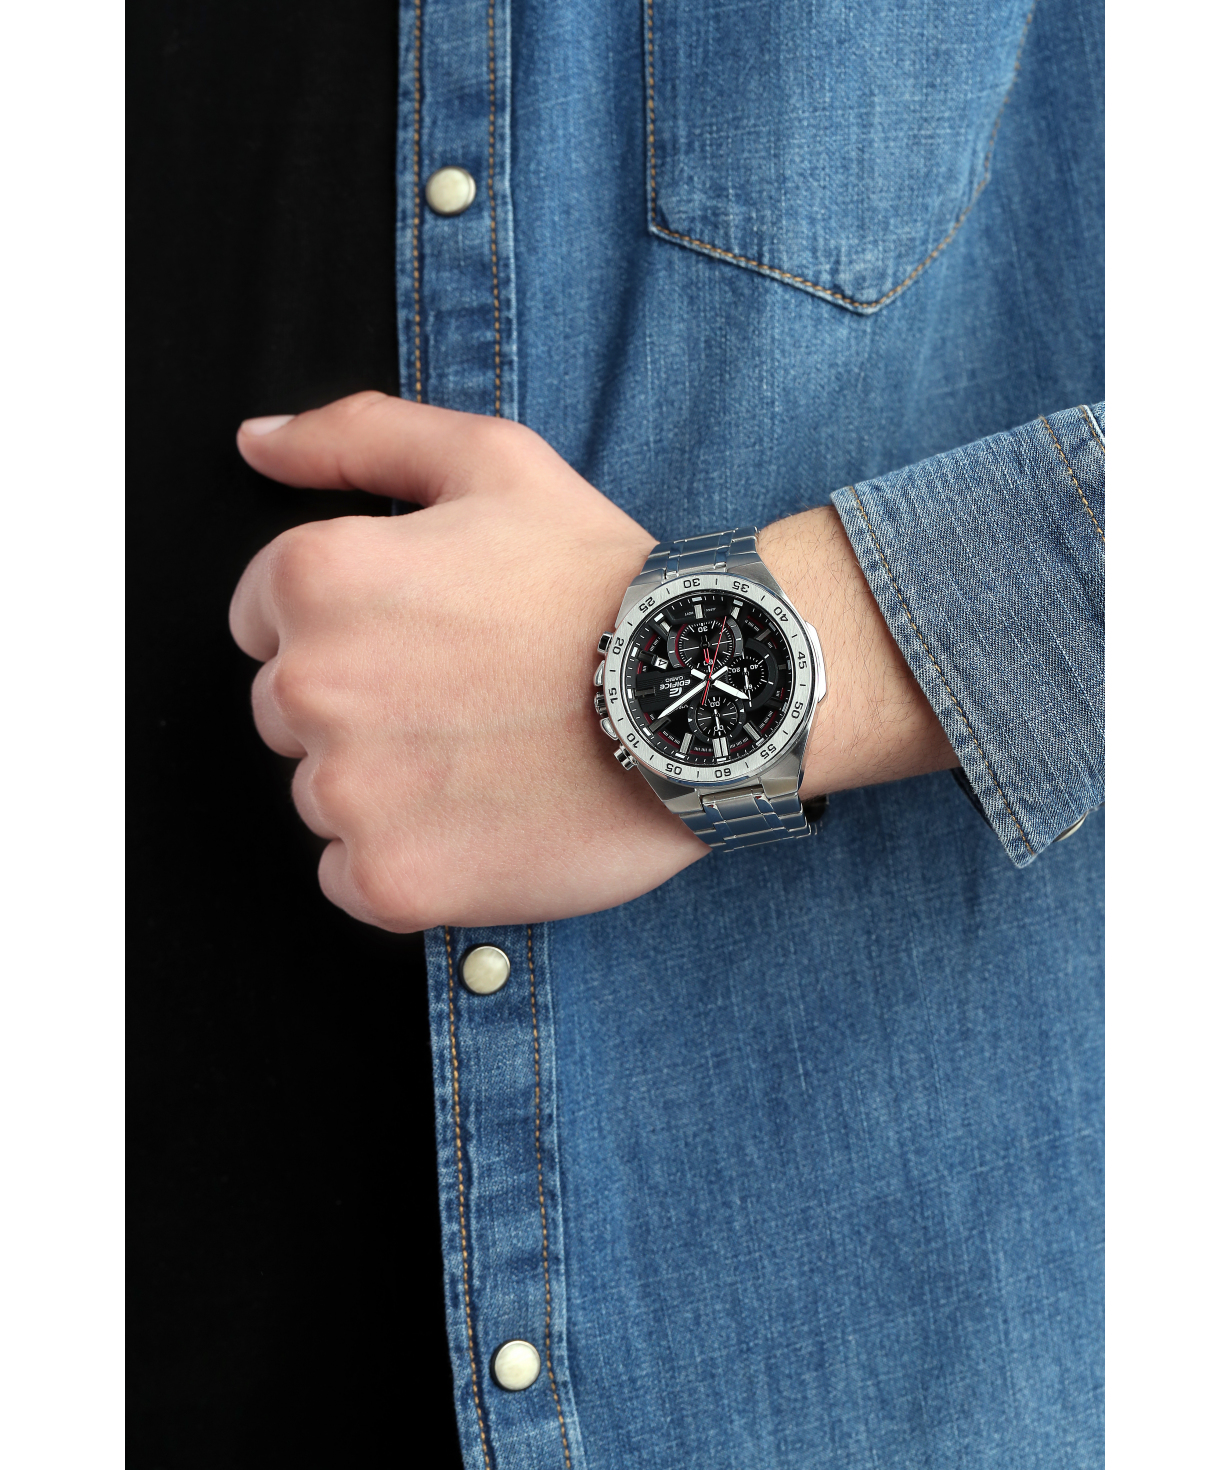 Ժամացույց  «Casio» ձեռքի  EFR-564D-1AVUDF